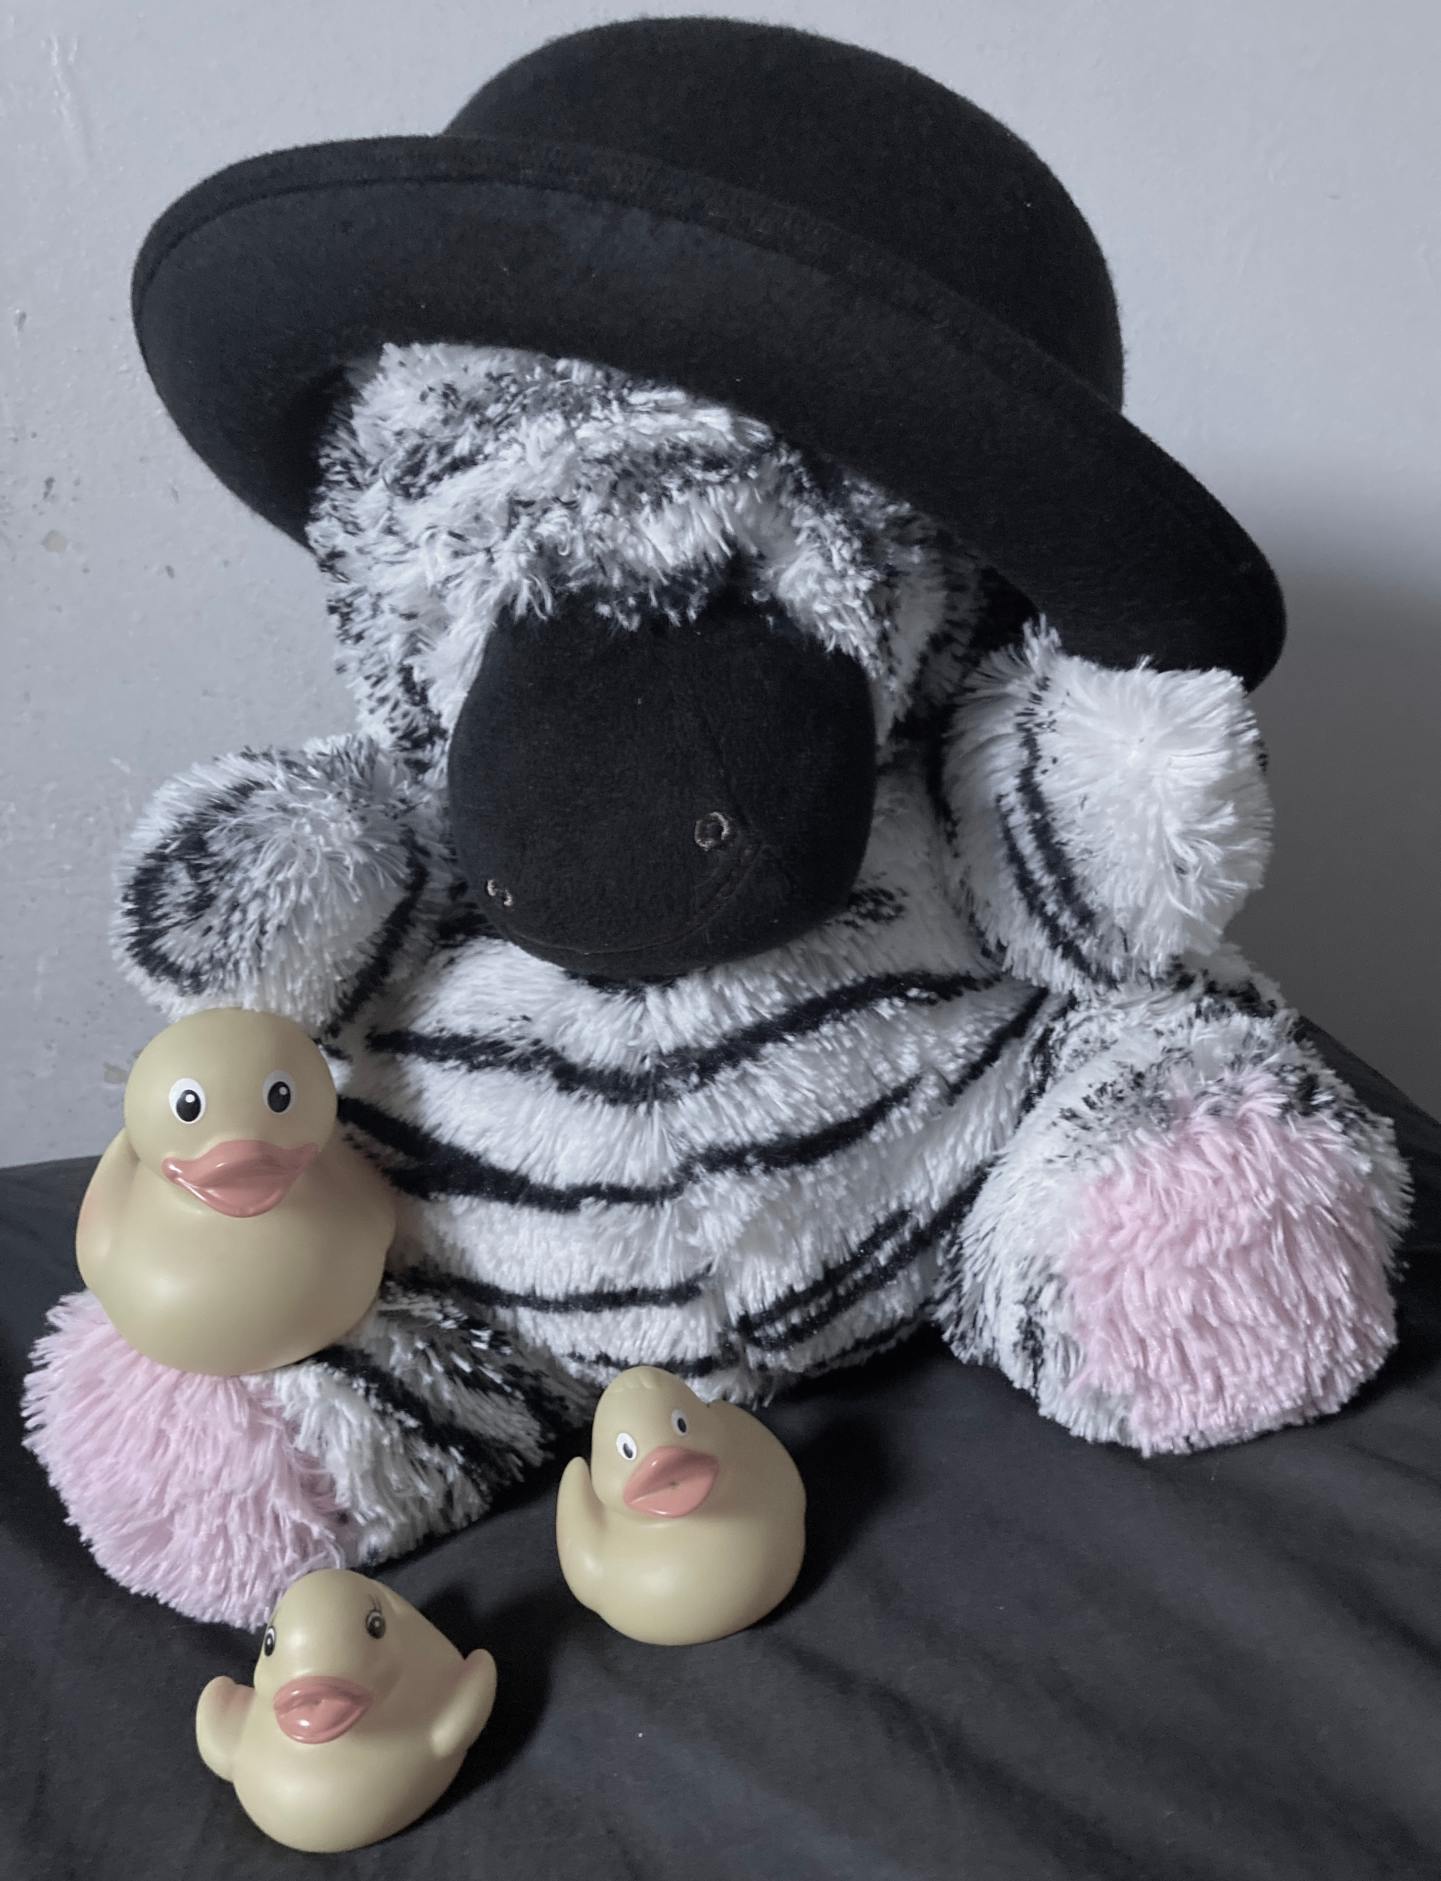 Black Zebra plushy wearing bowler hat. 3 rubber duckies.